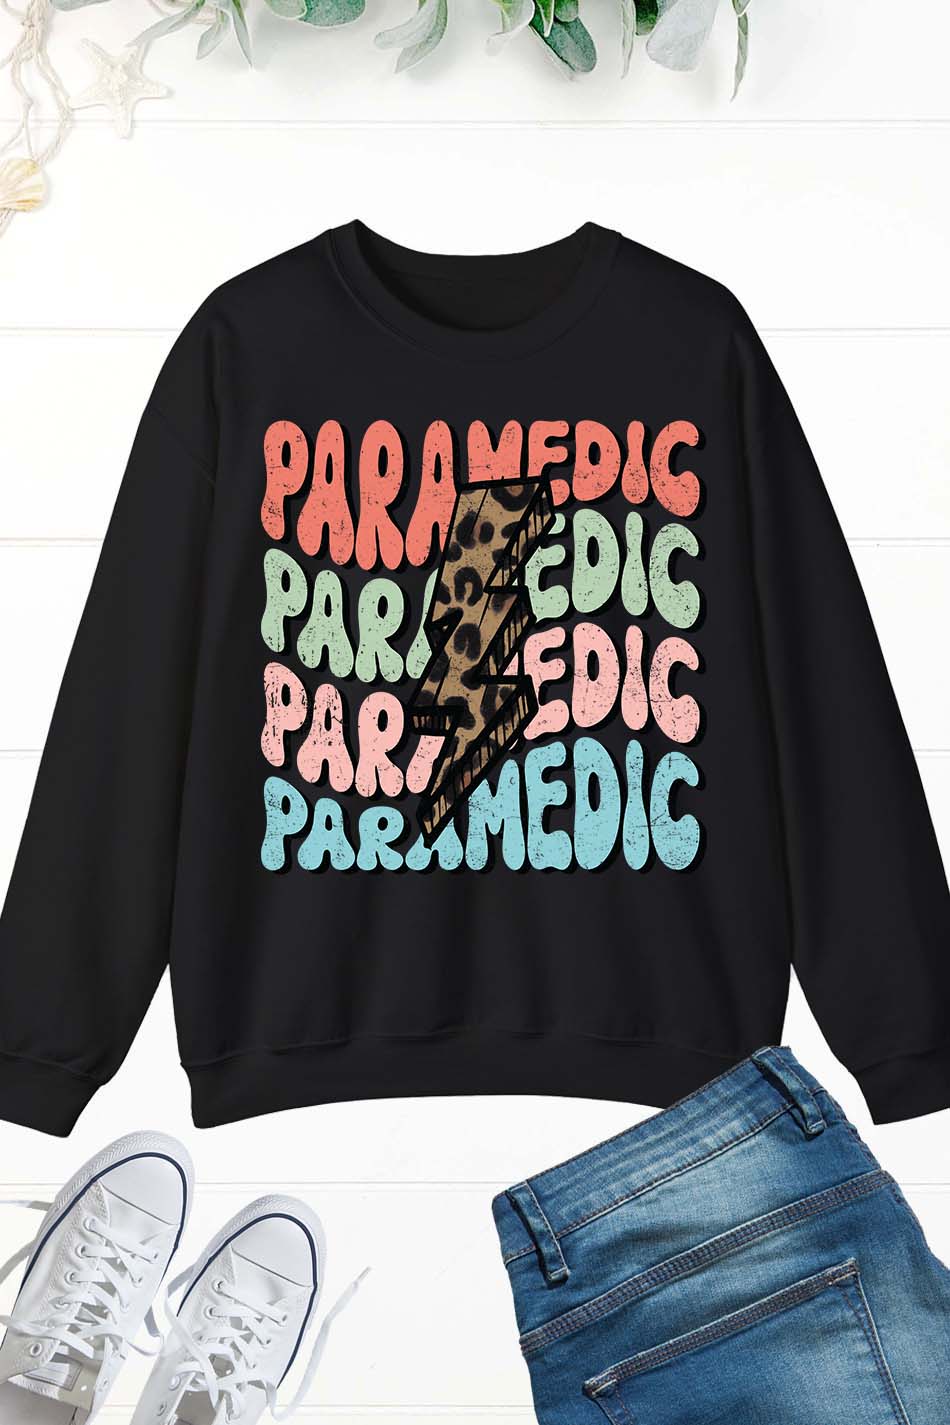 Paramedic Sweatshirt Gifts Sweatshirt